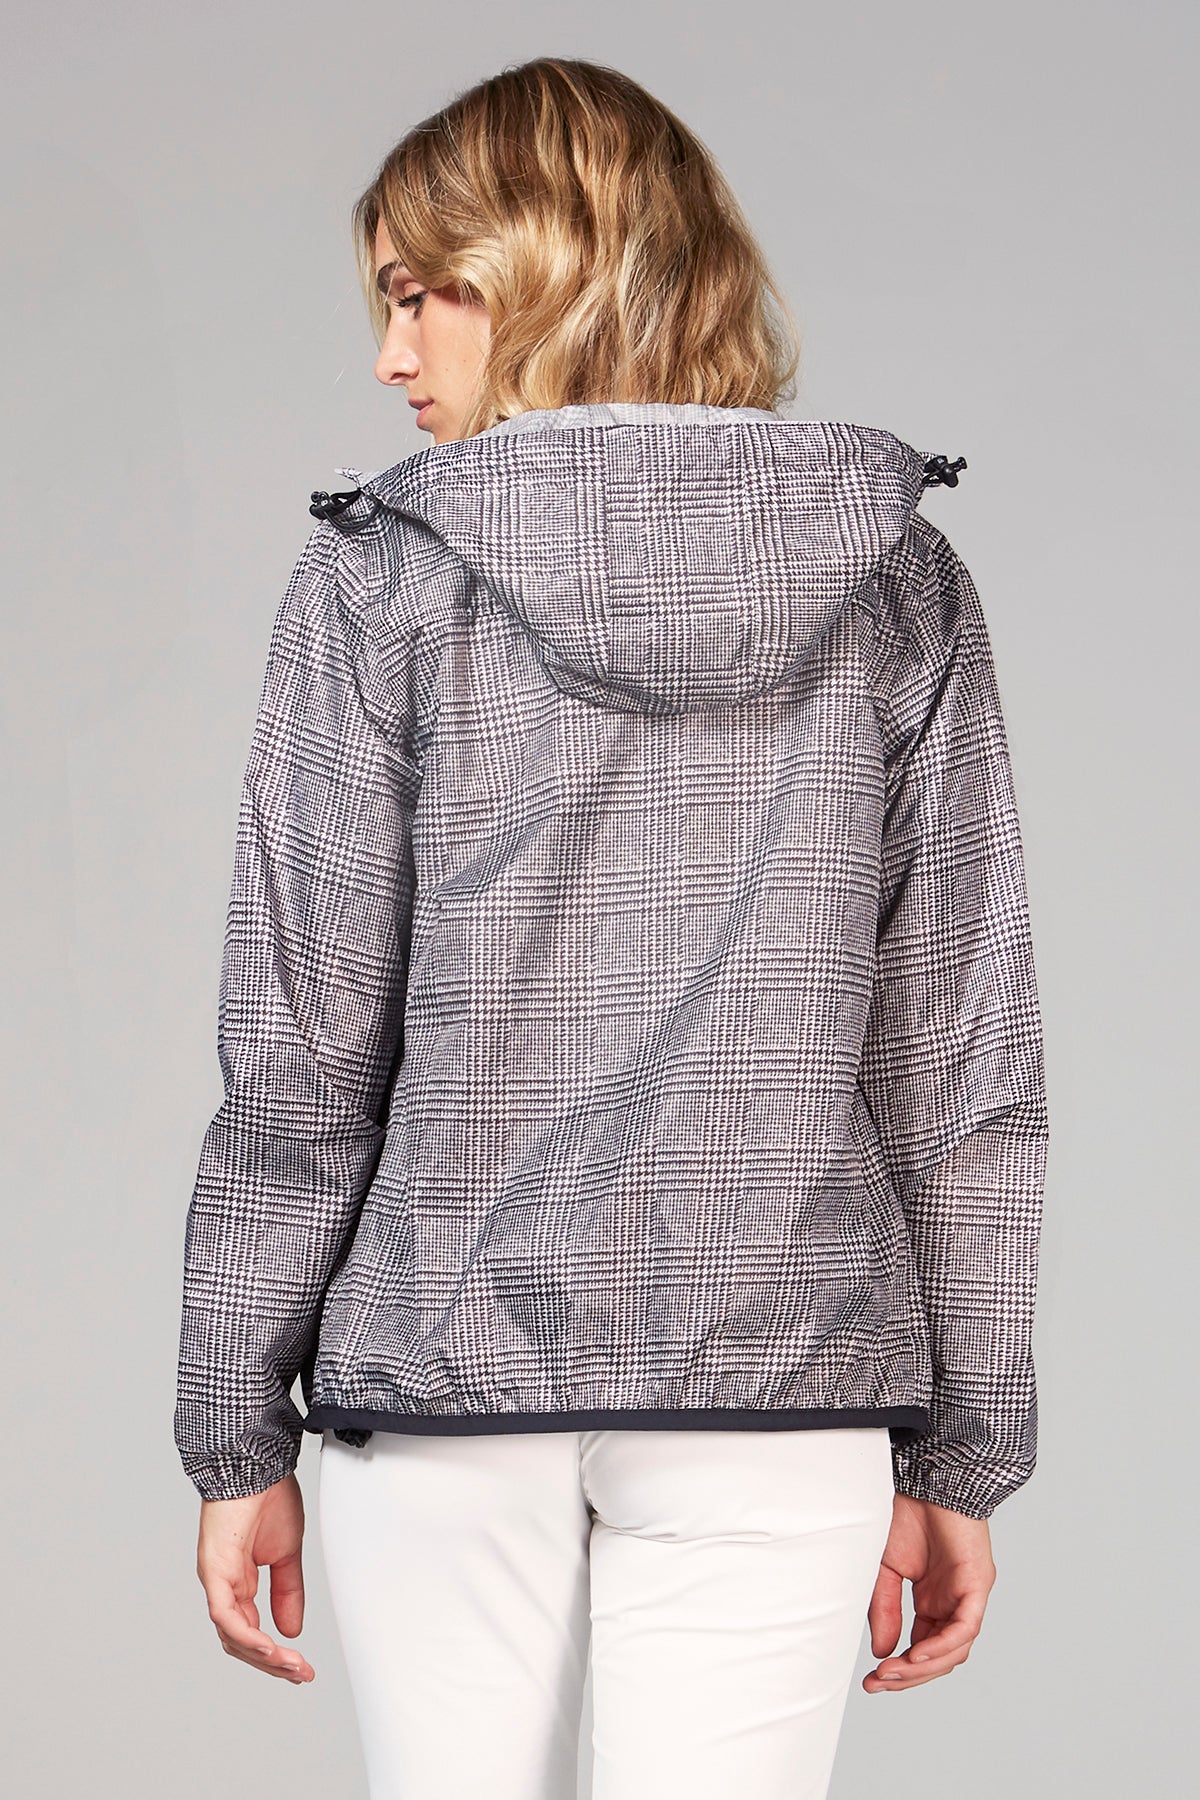 Sloane Print - plaid full zip packable rain jacket - O8Lifestyle